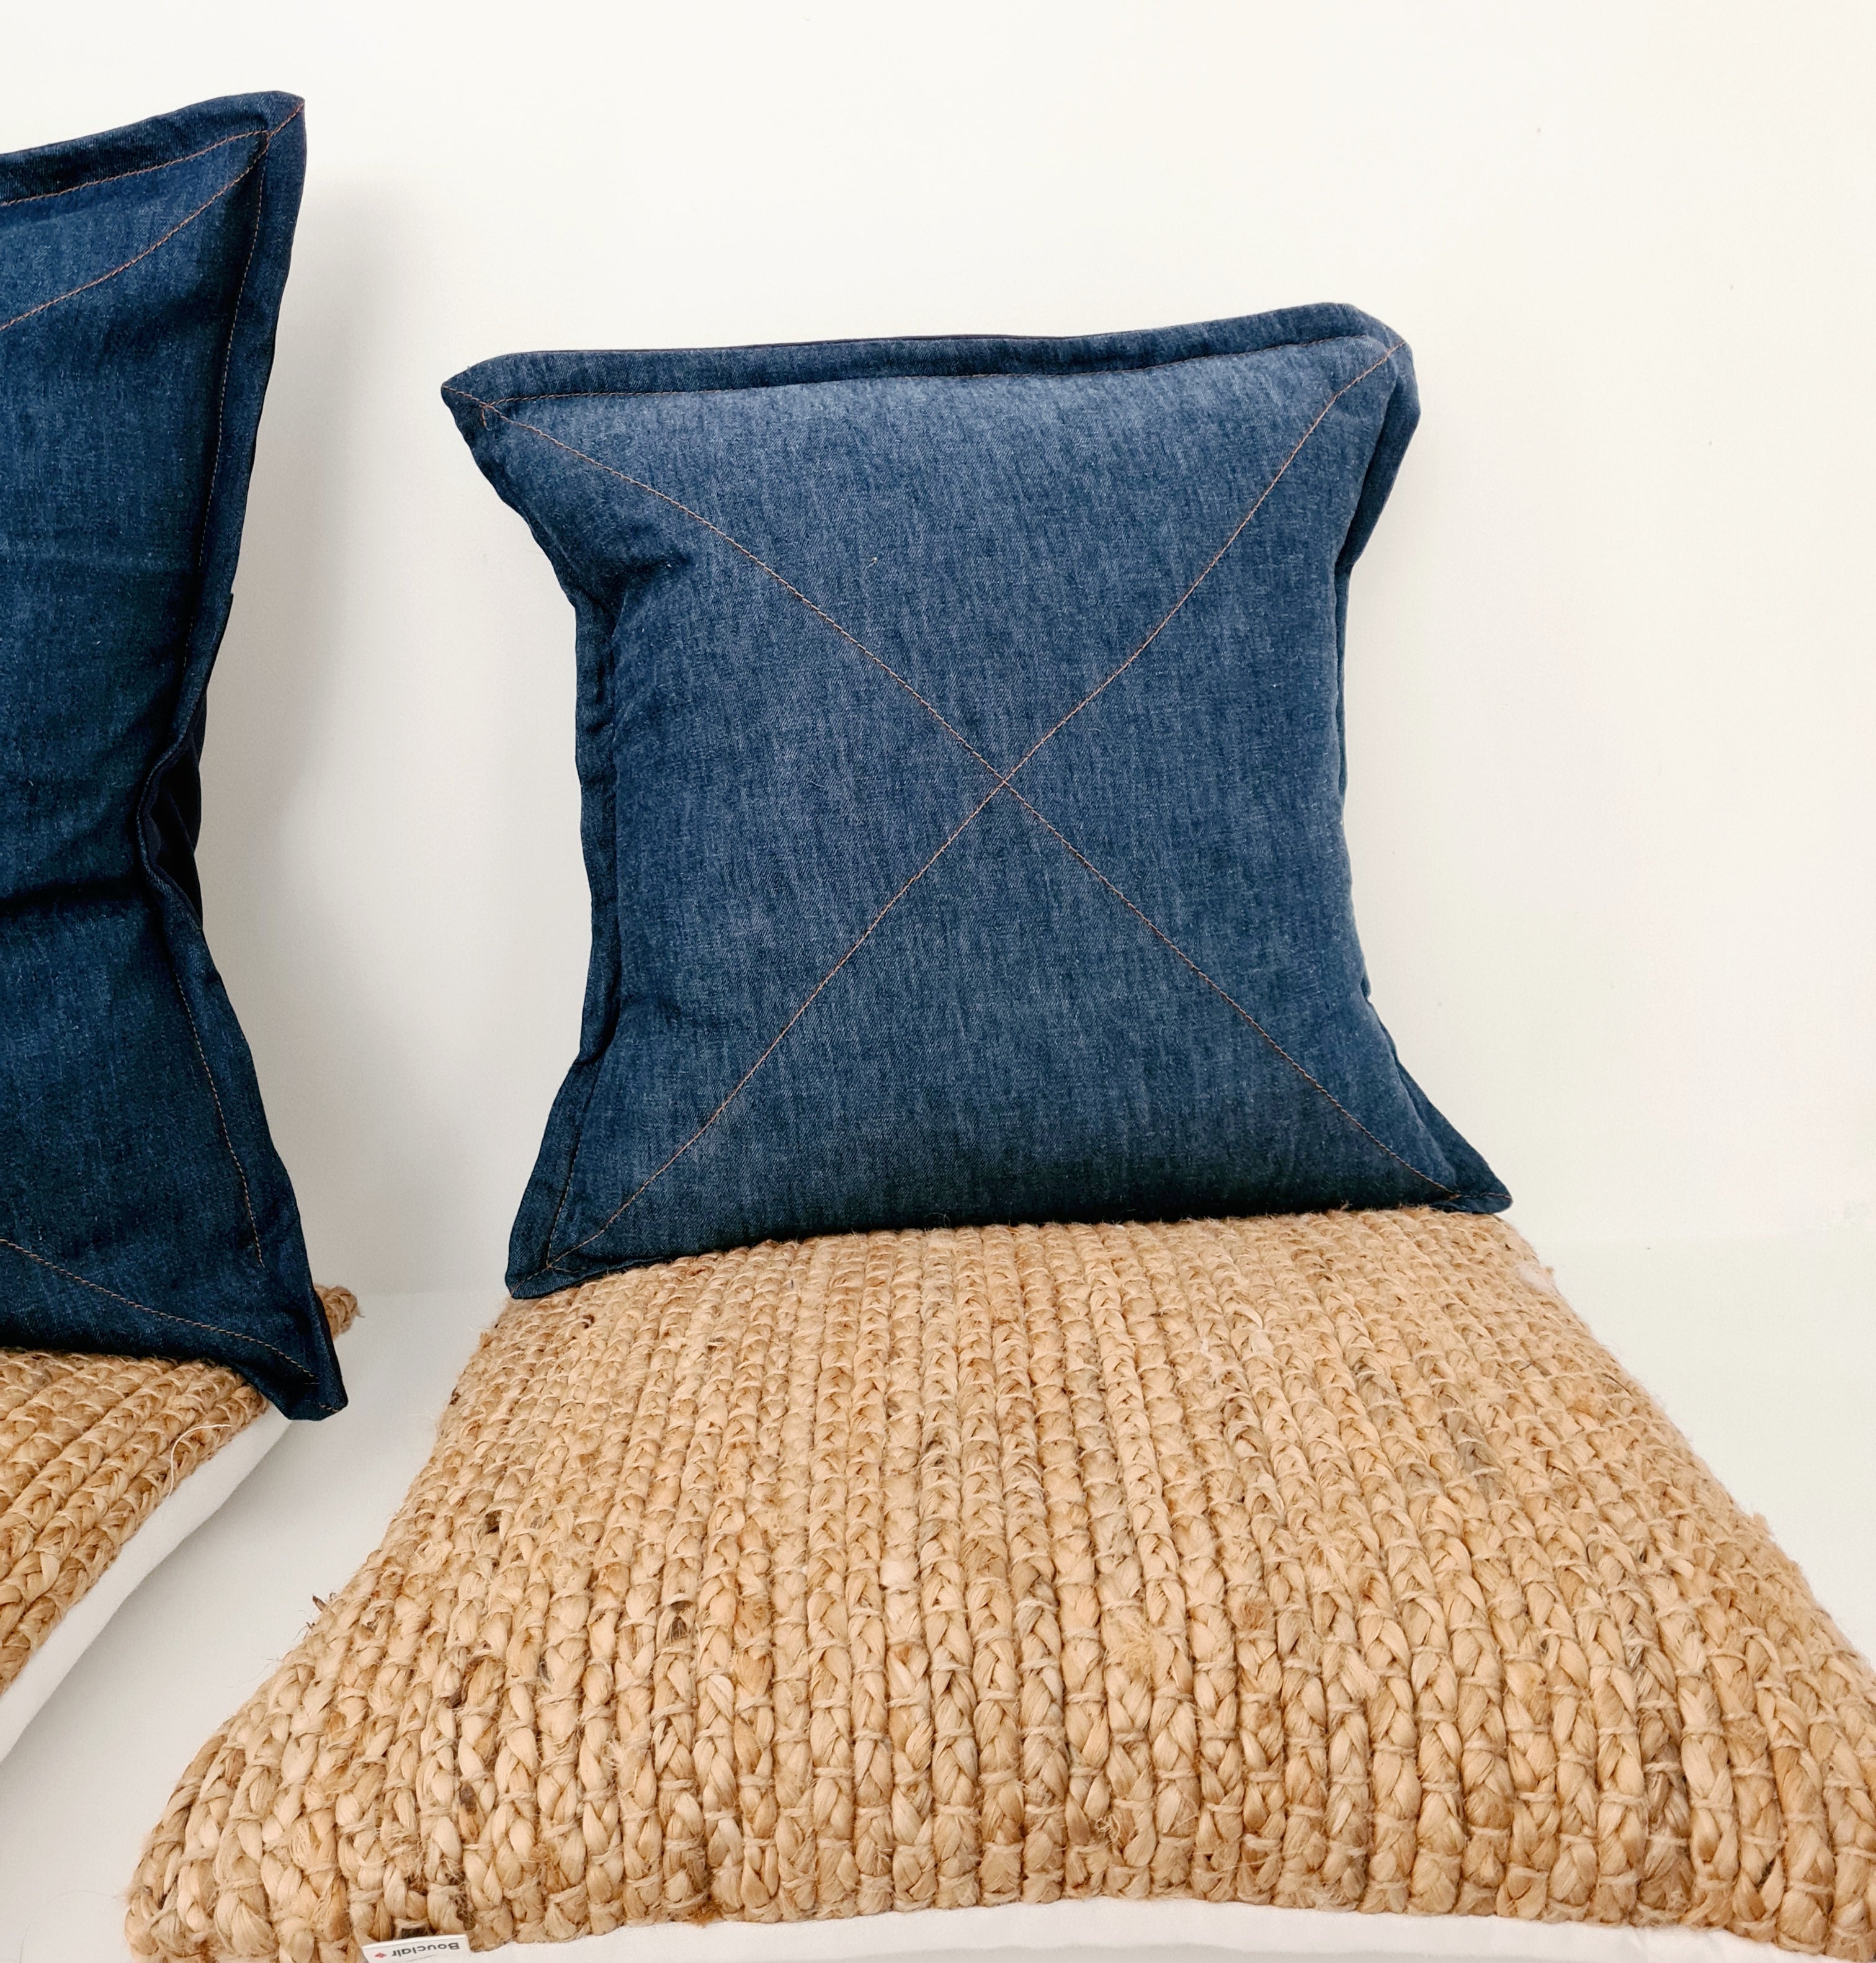 Organic Denim Cushions - Hessian Pony Cushions The Spotted Quoll Studio 